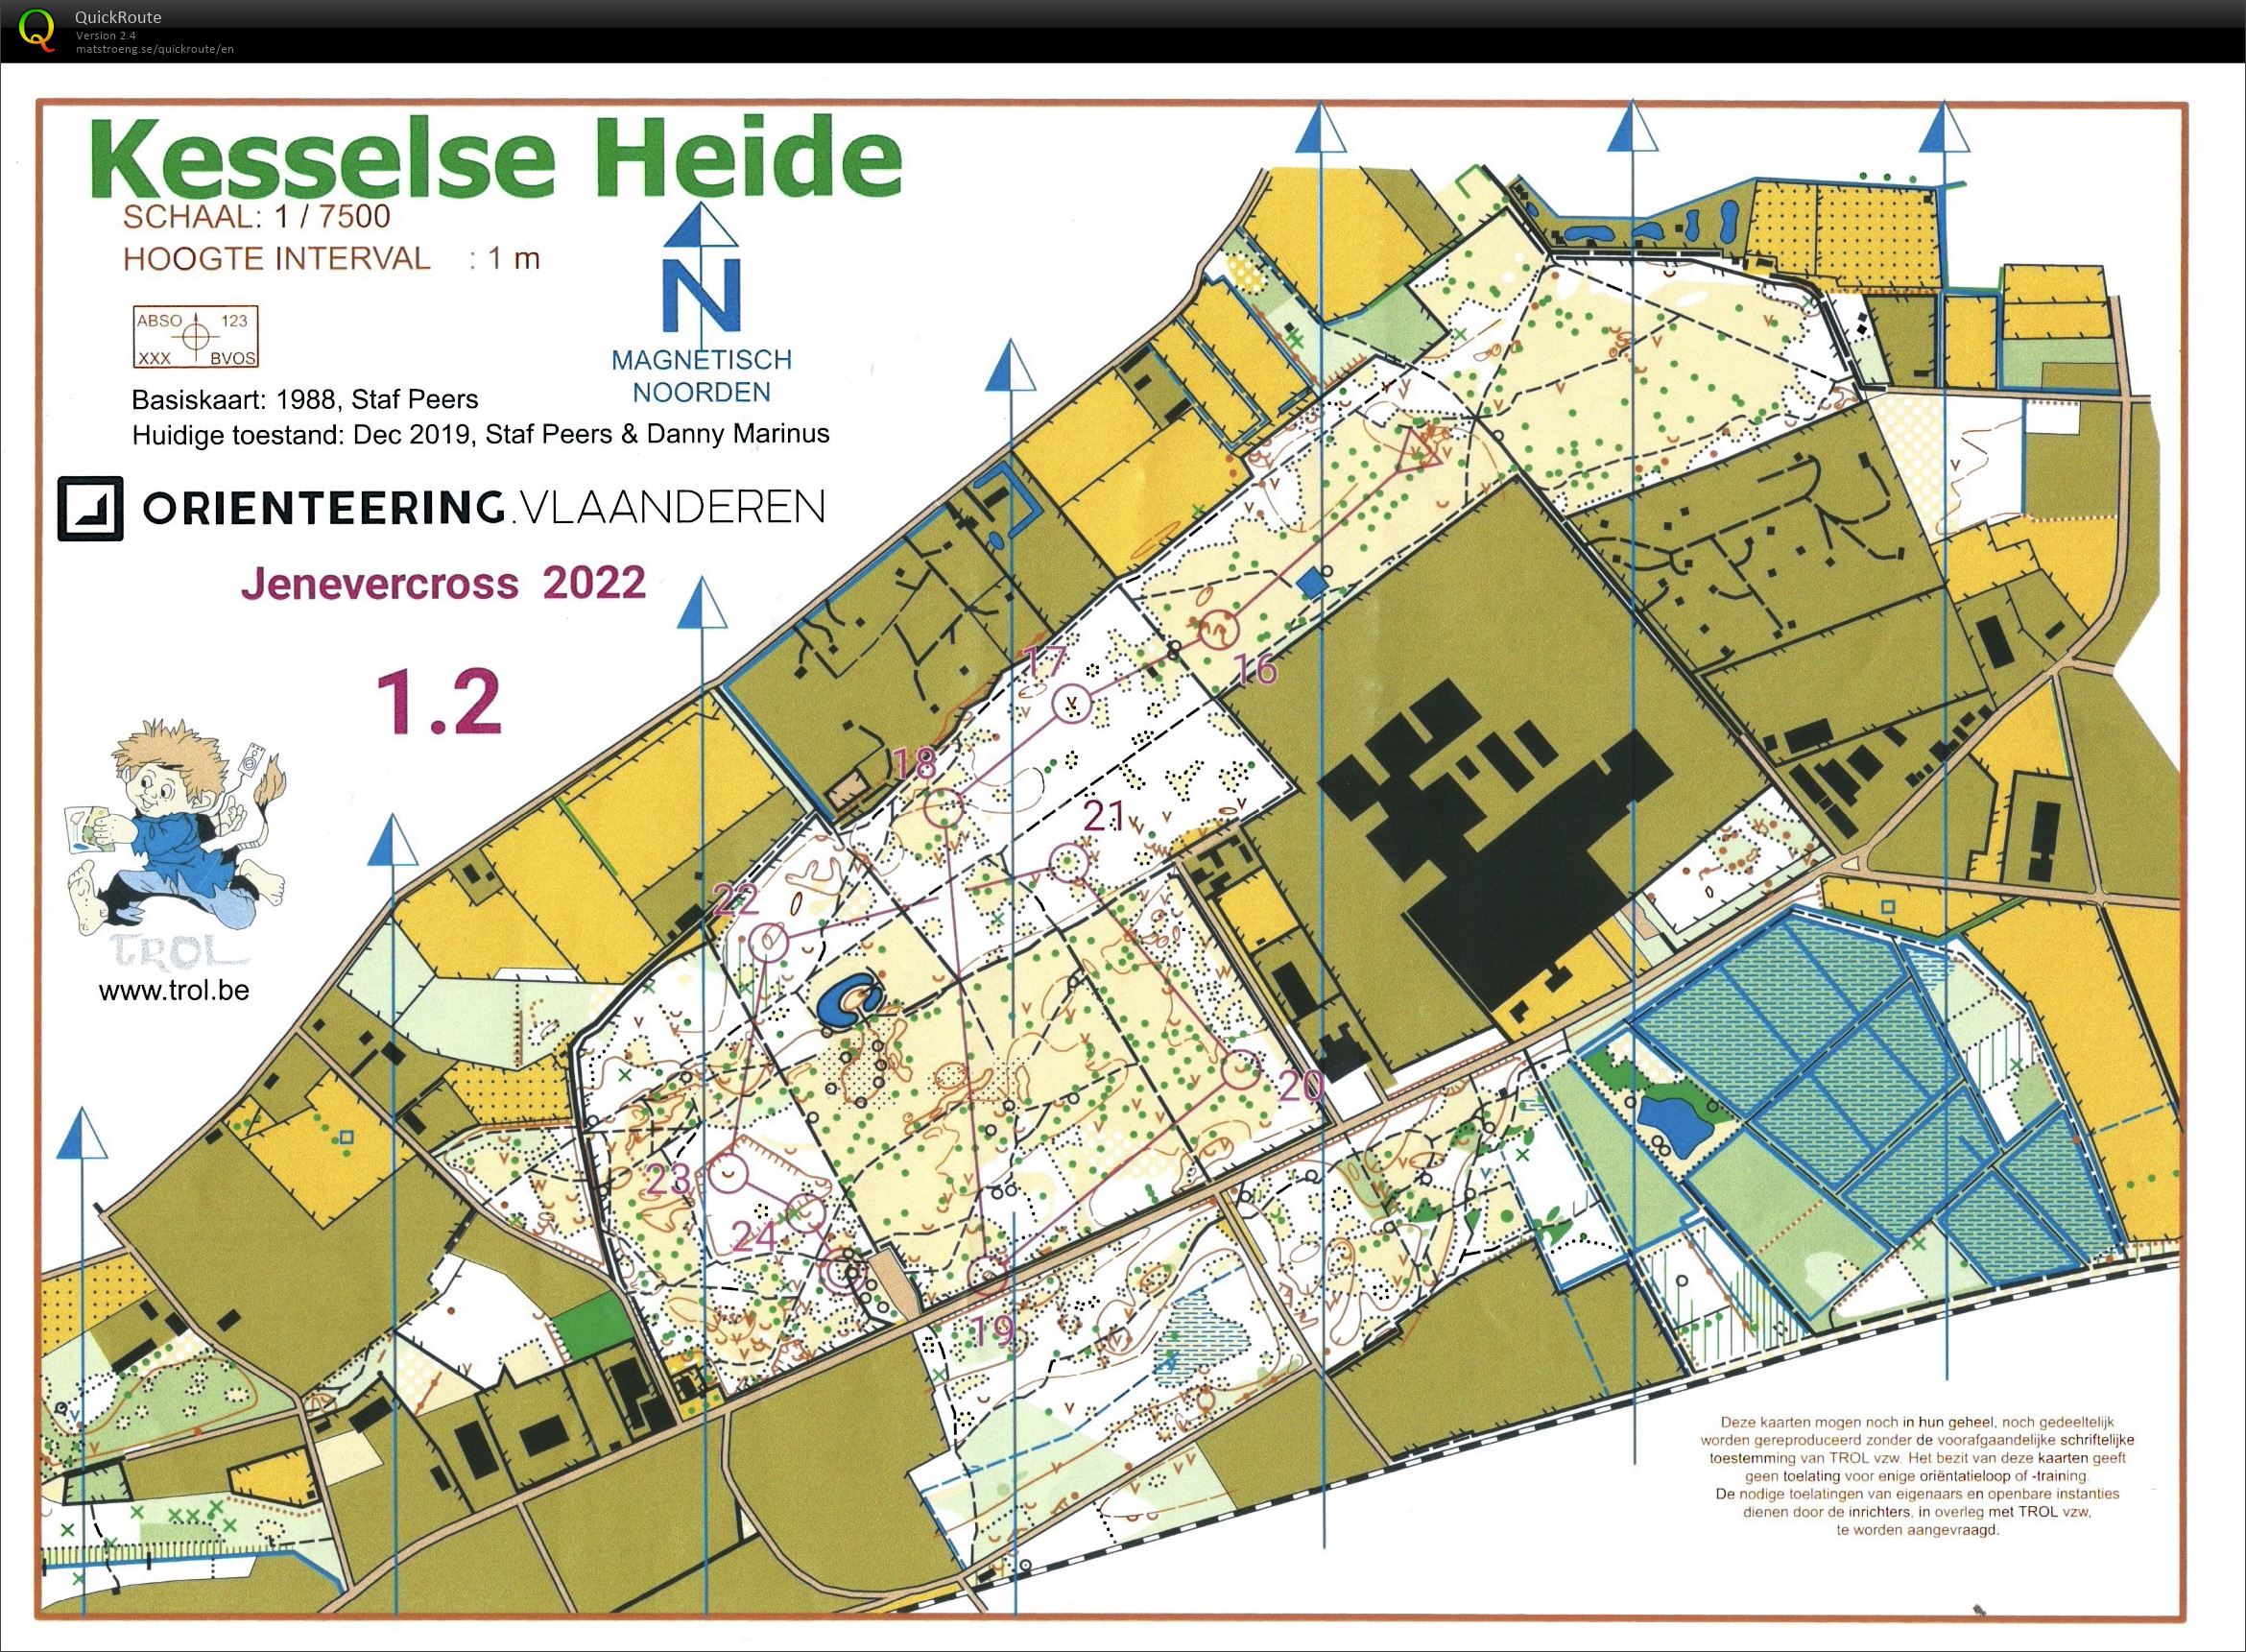 Jenevercross 2022 - Kesselse Heide - 1.2 (07/01/2022)